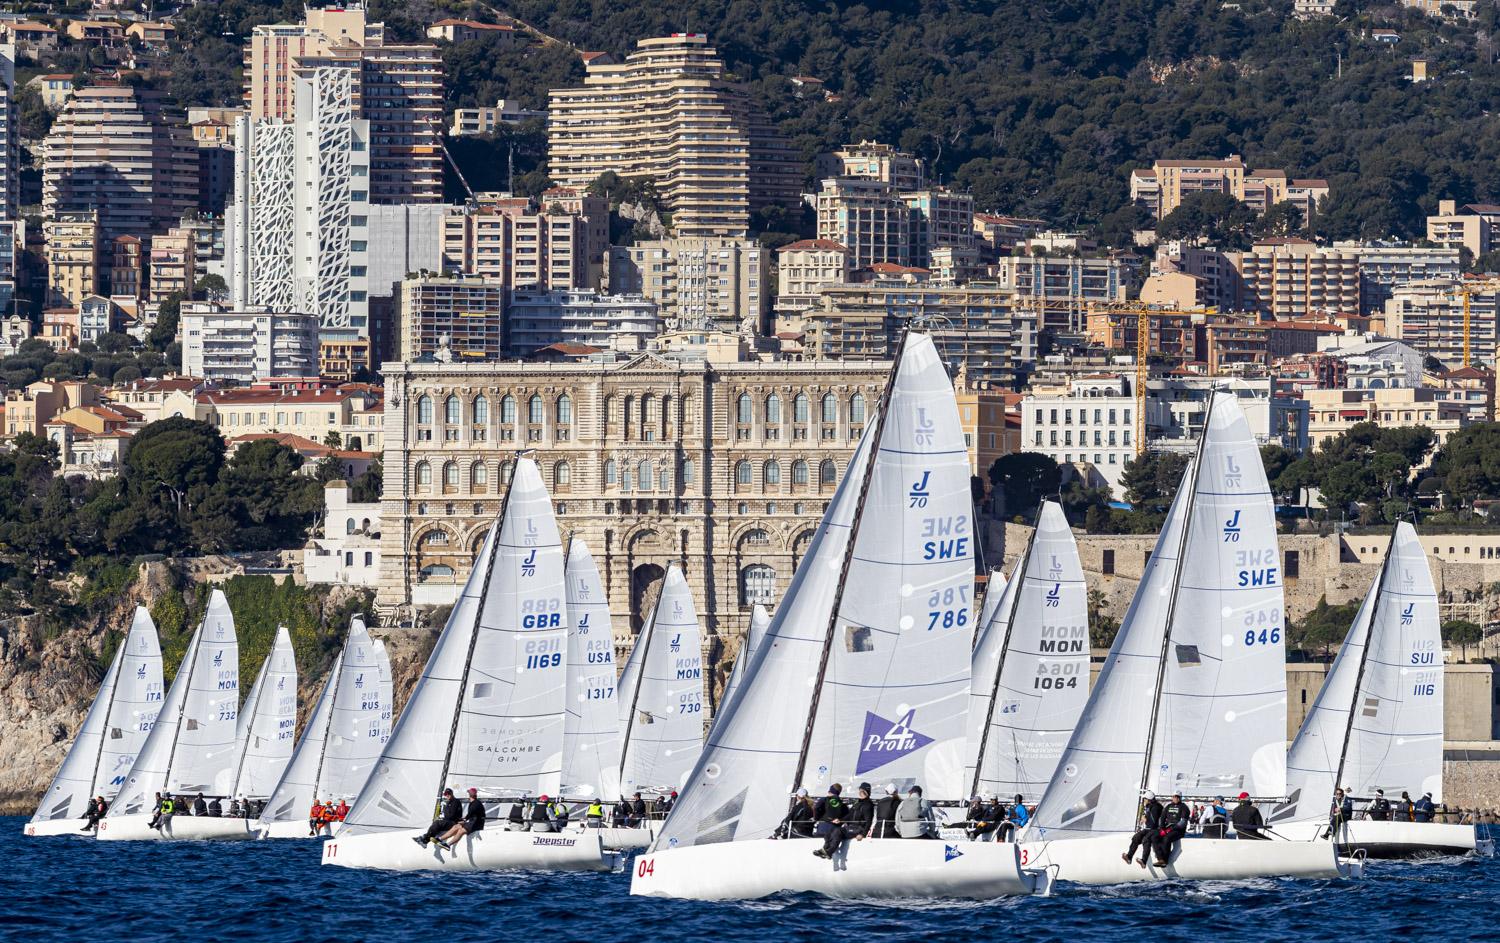 Yacht Club de Monaco, 2022's all about competition